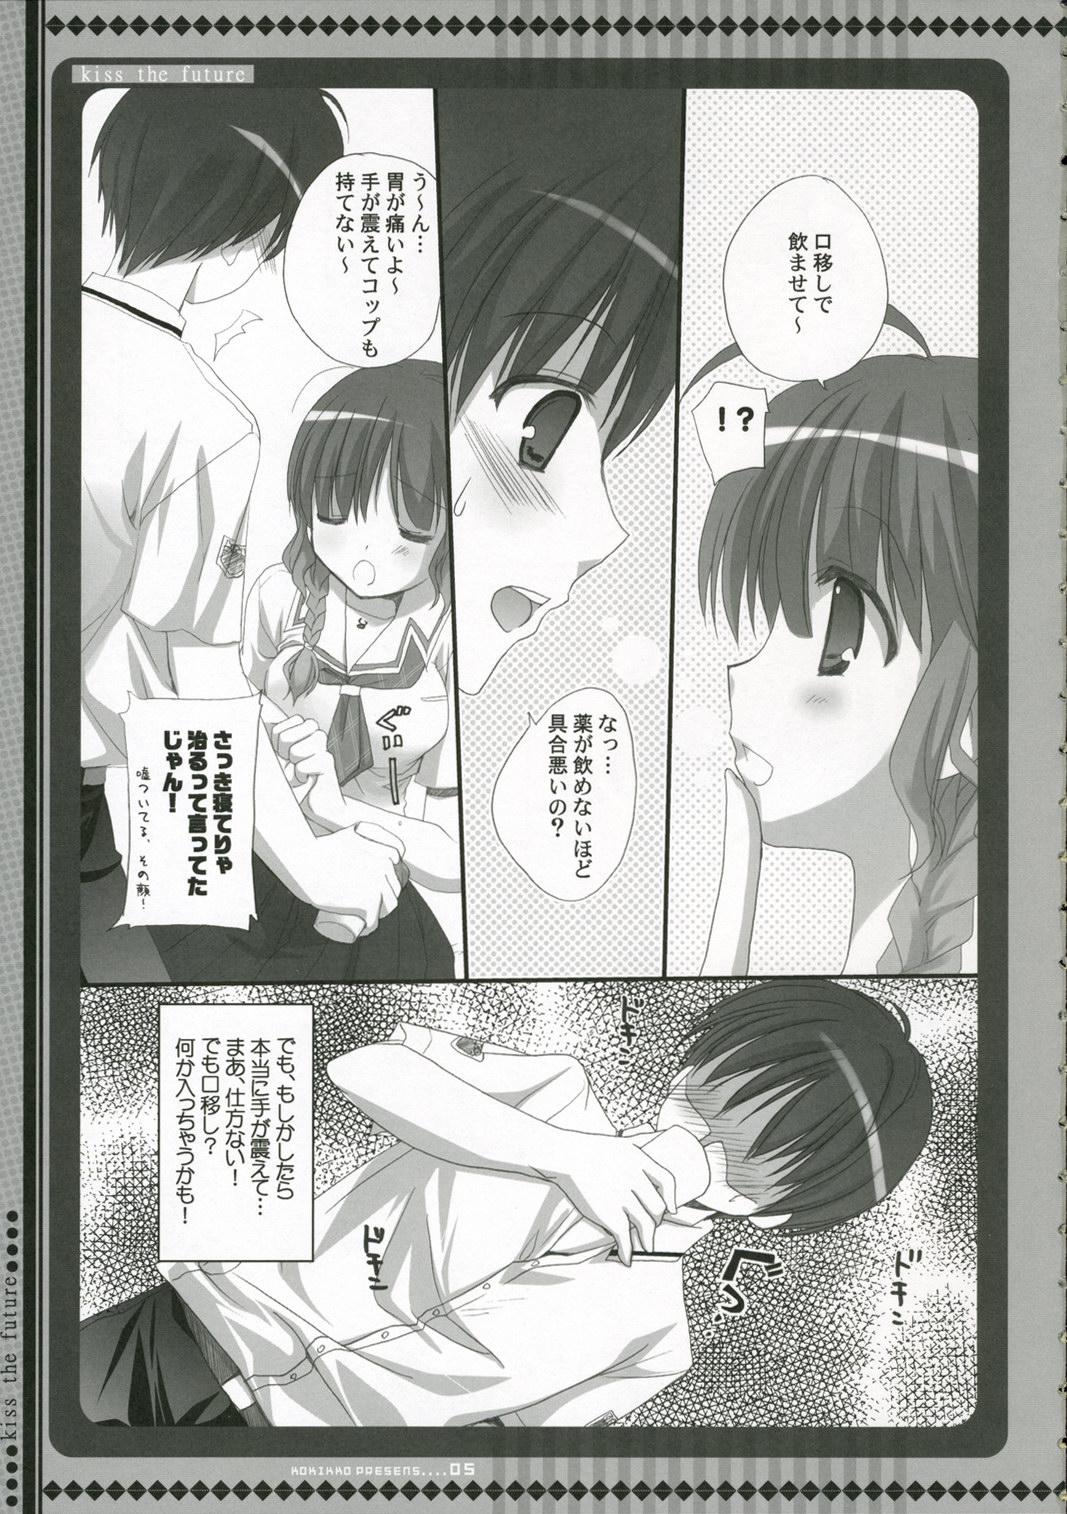 Cumfacial Mirai ni Kiss o - Kiss the Future - Kimikiss Pretty - Page 4